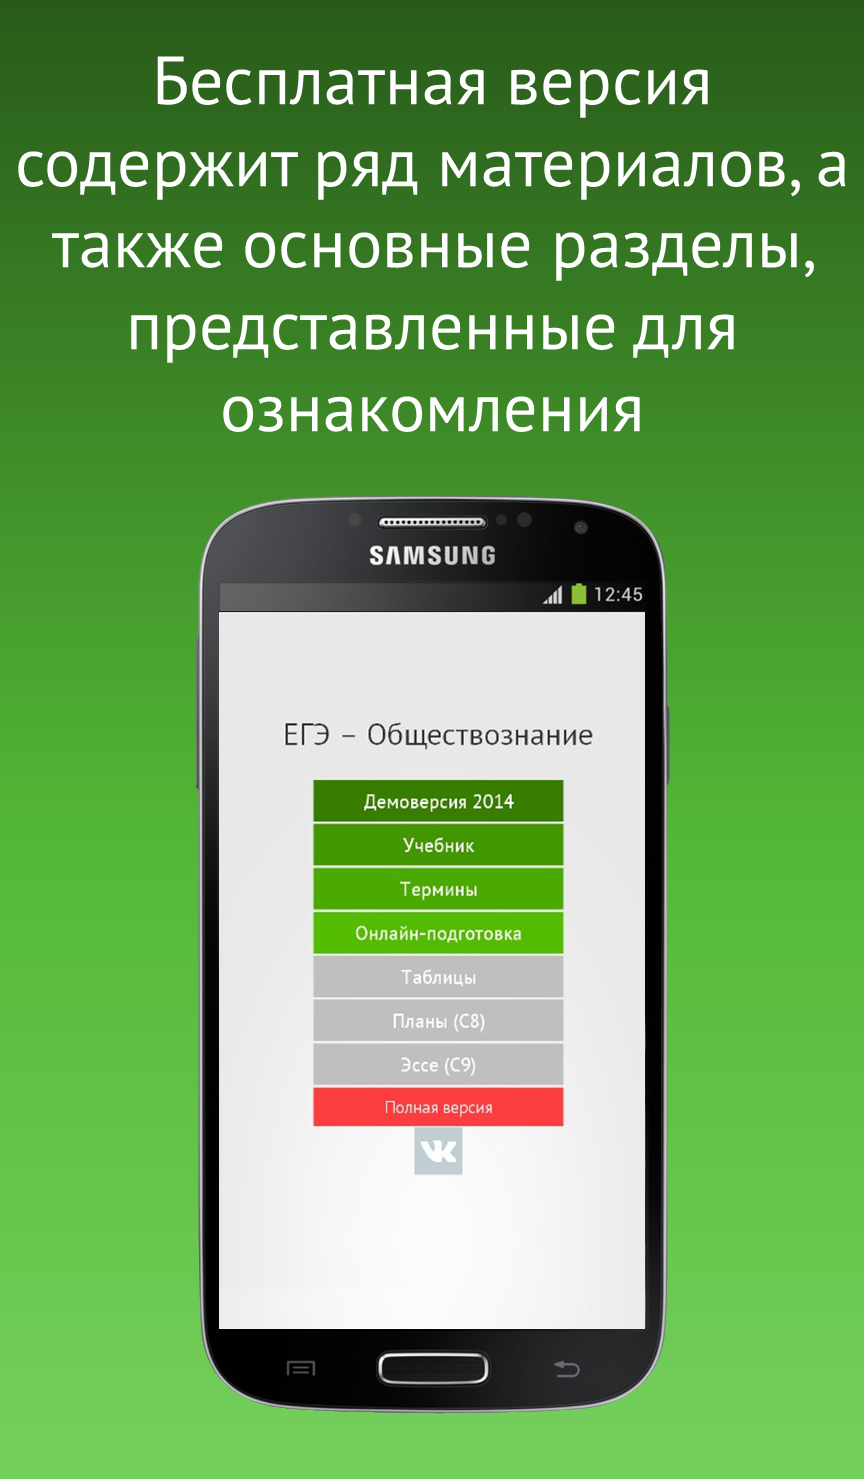 Android application ЕГЭ – Обществознание(Лайт) screenshort